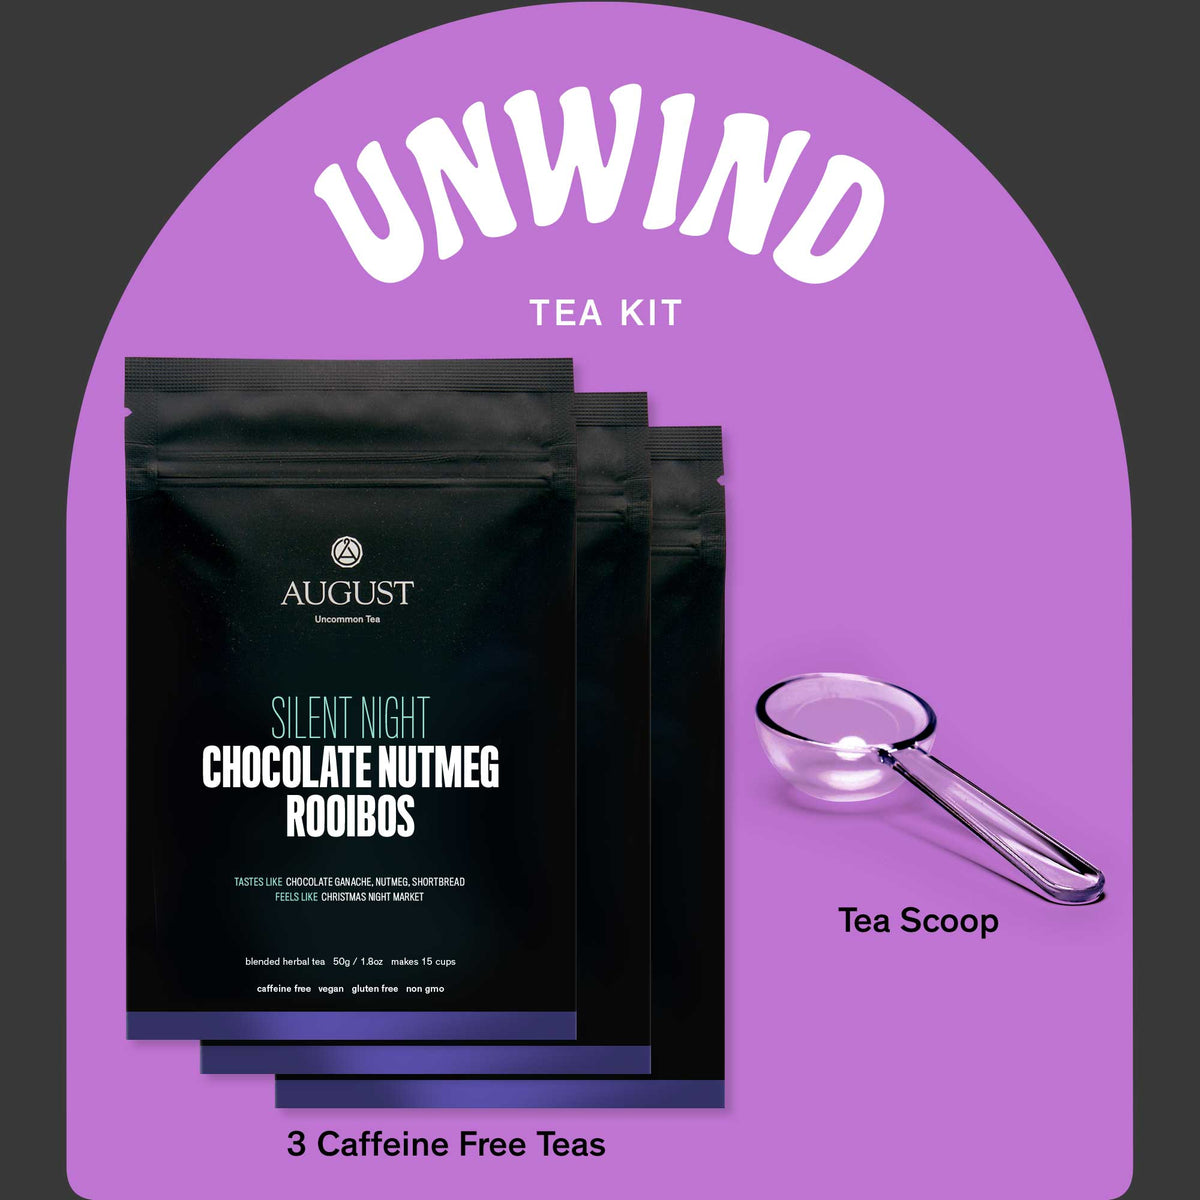 Unwind Tea Kit: 3 Caffeine Free Teas to Relax and De-stress